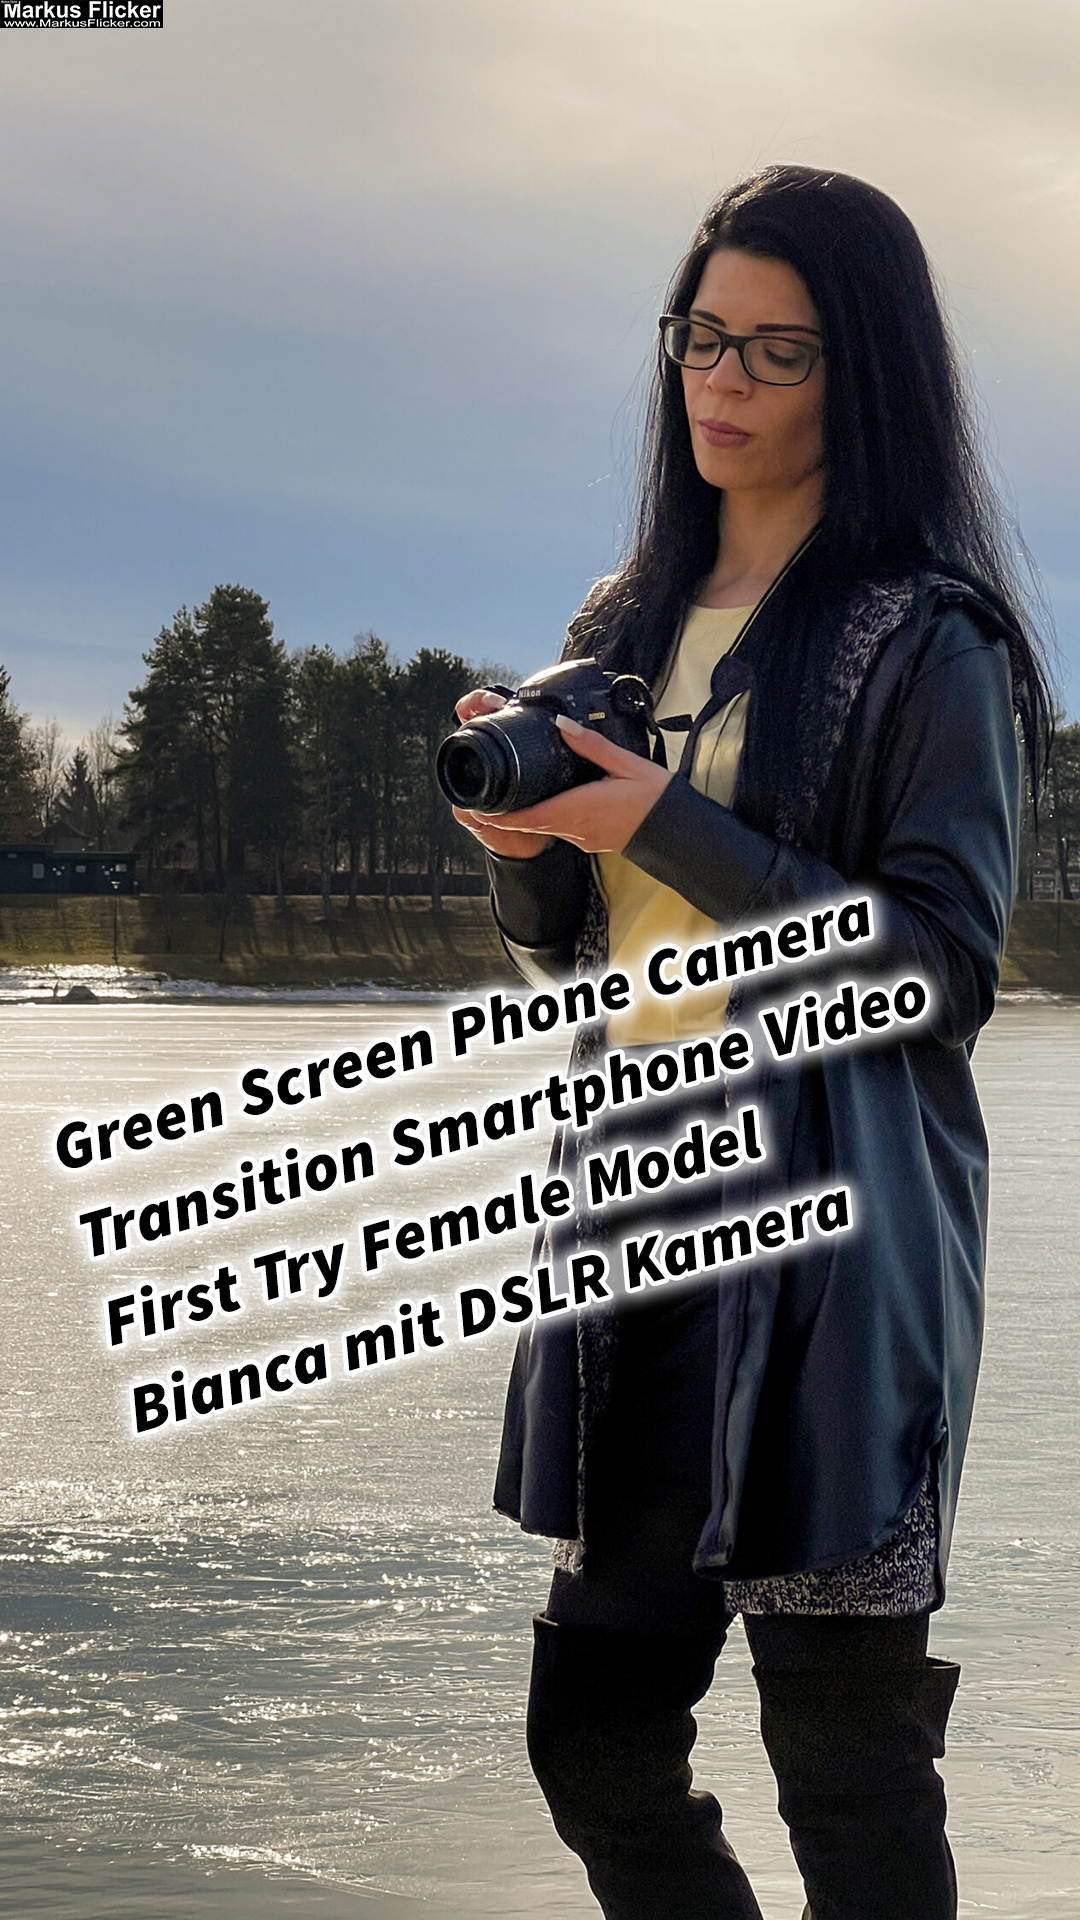 Green Screen Phone Camera Transition Smartphone Video First Try Female Model Bianca mit DSLR Kamera